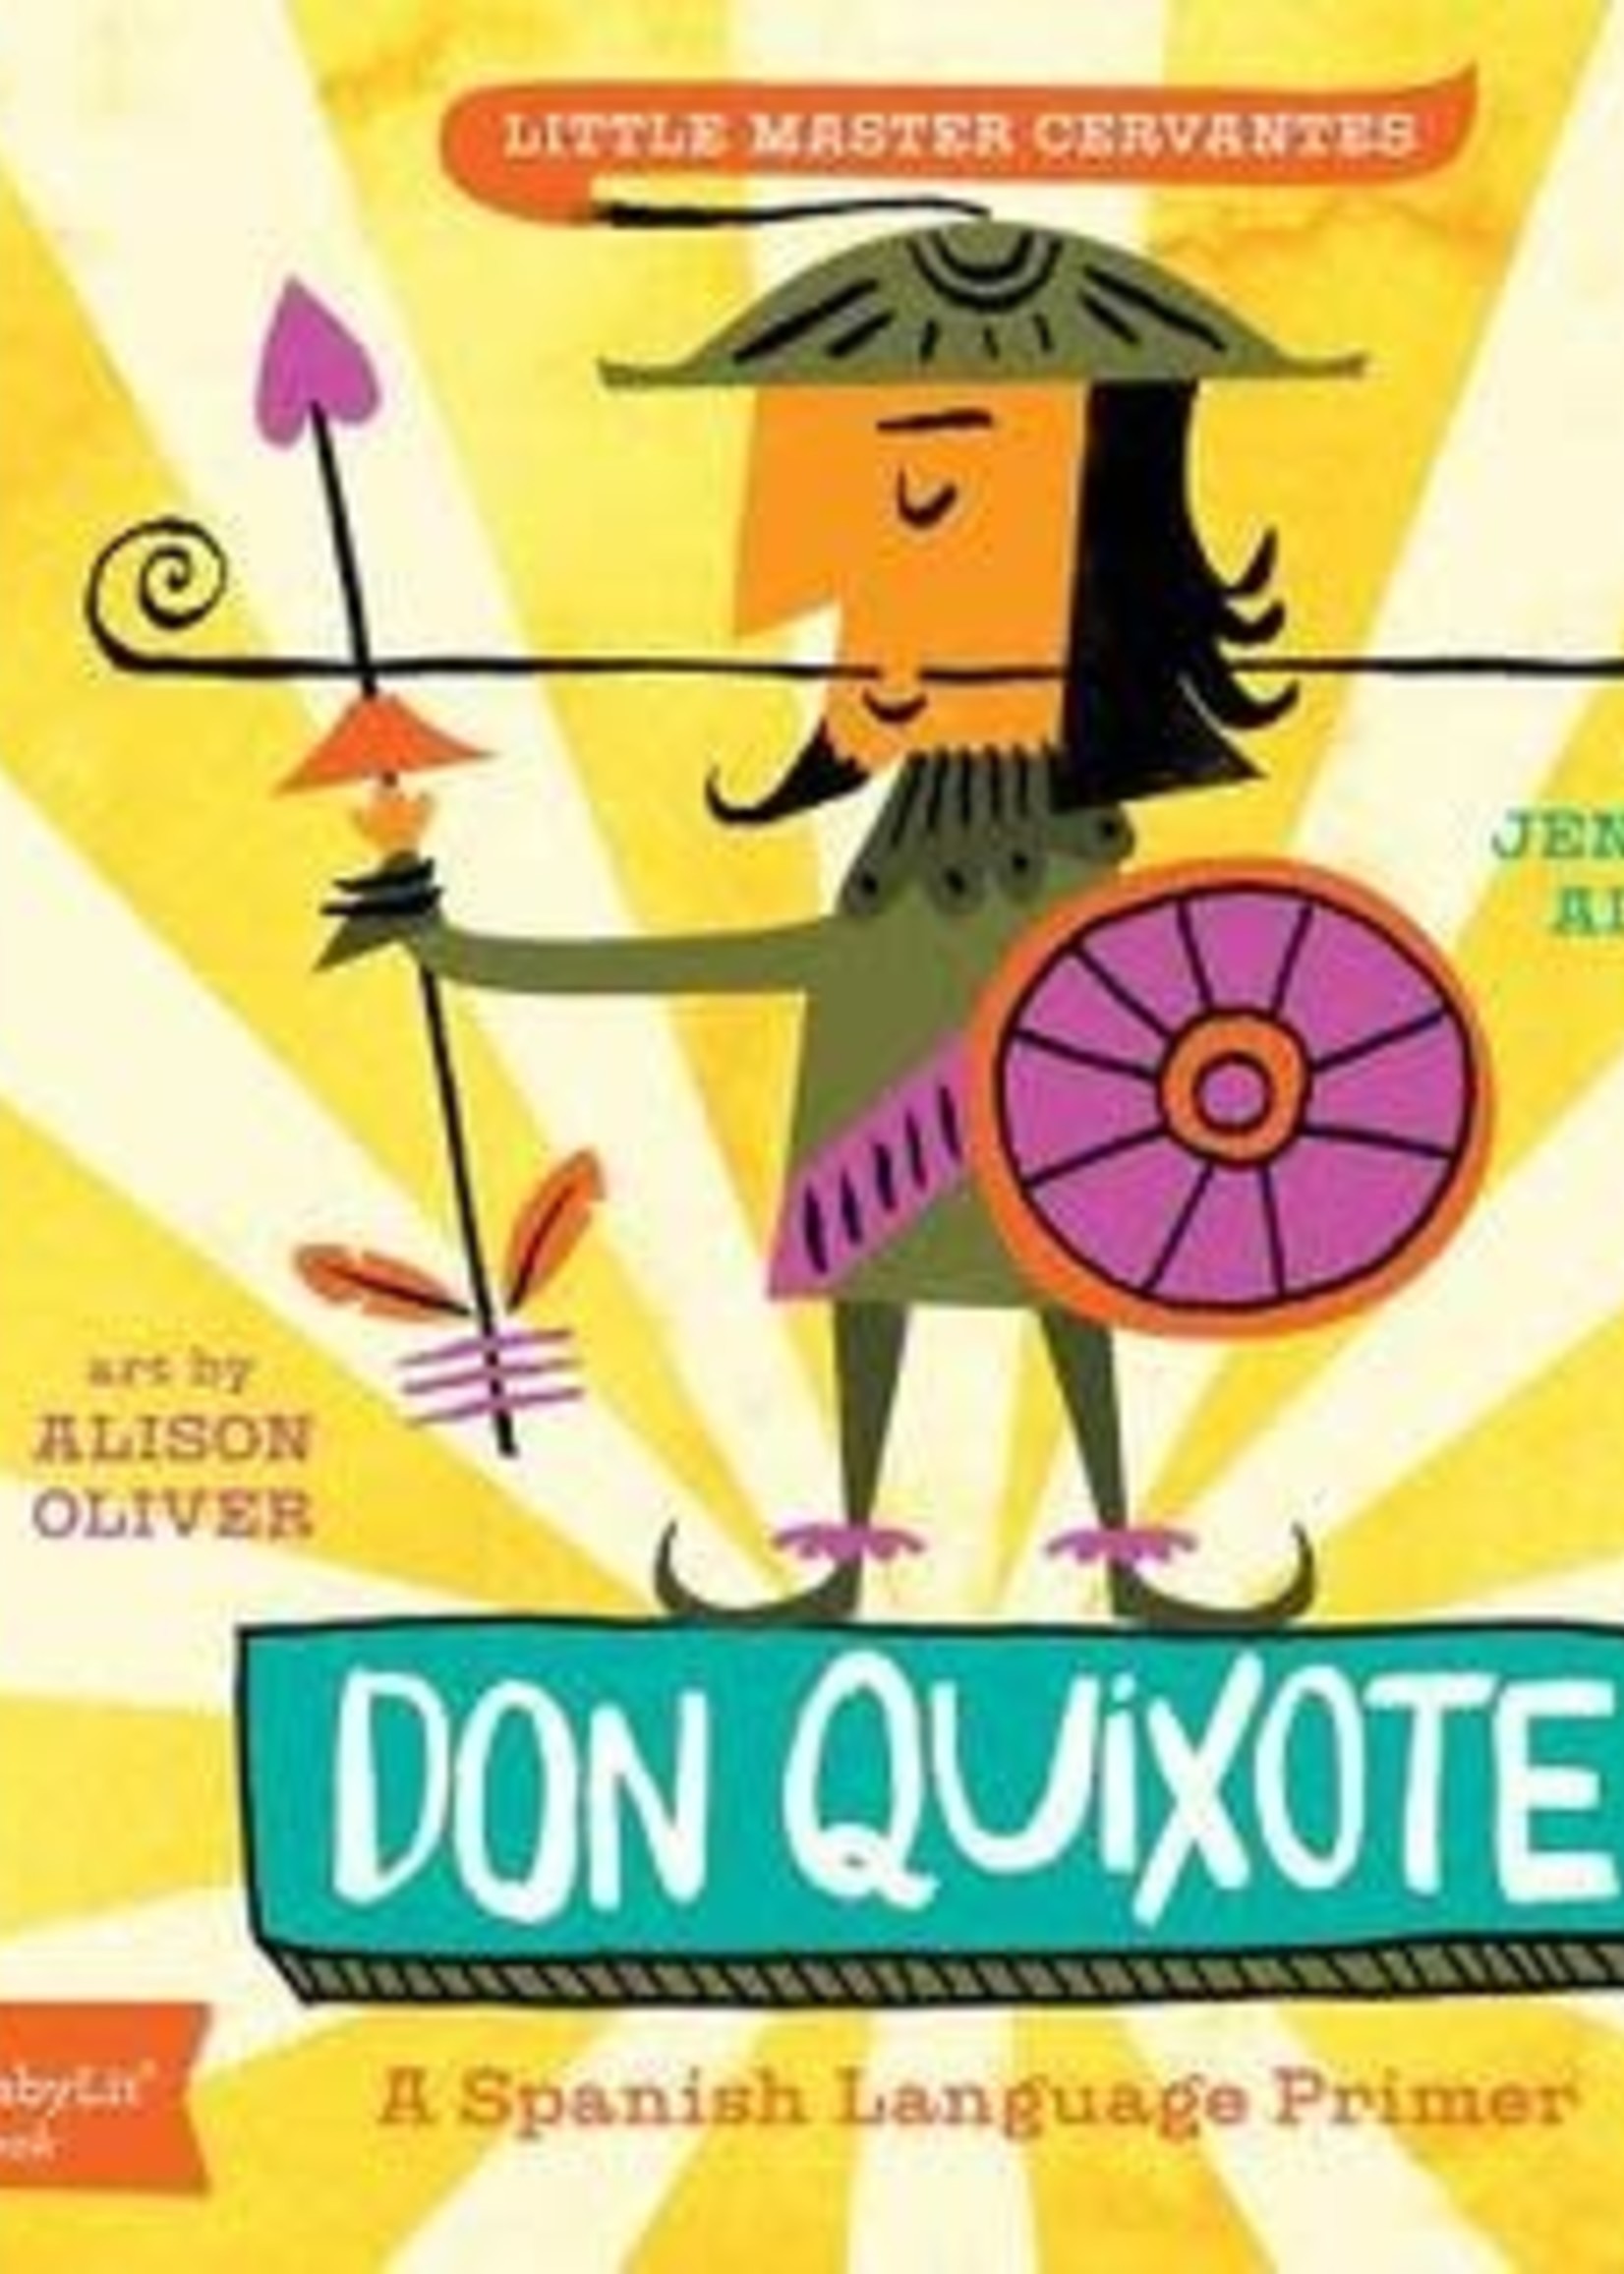 Don Quixote: A BabyLit® Spanish Language Primer by Jennifer Adams,  Alison Oliver